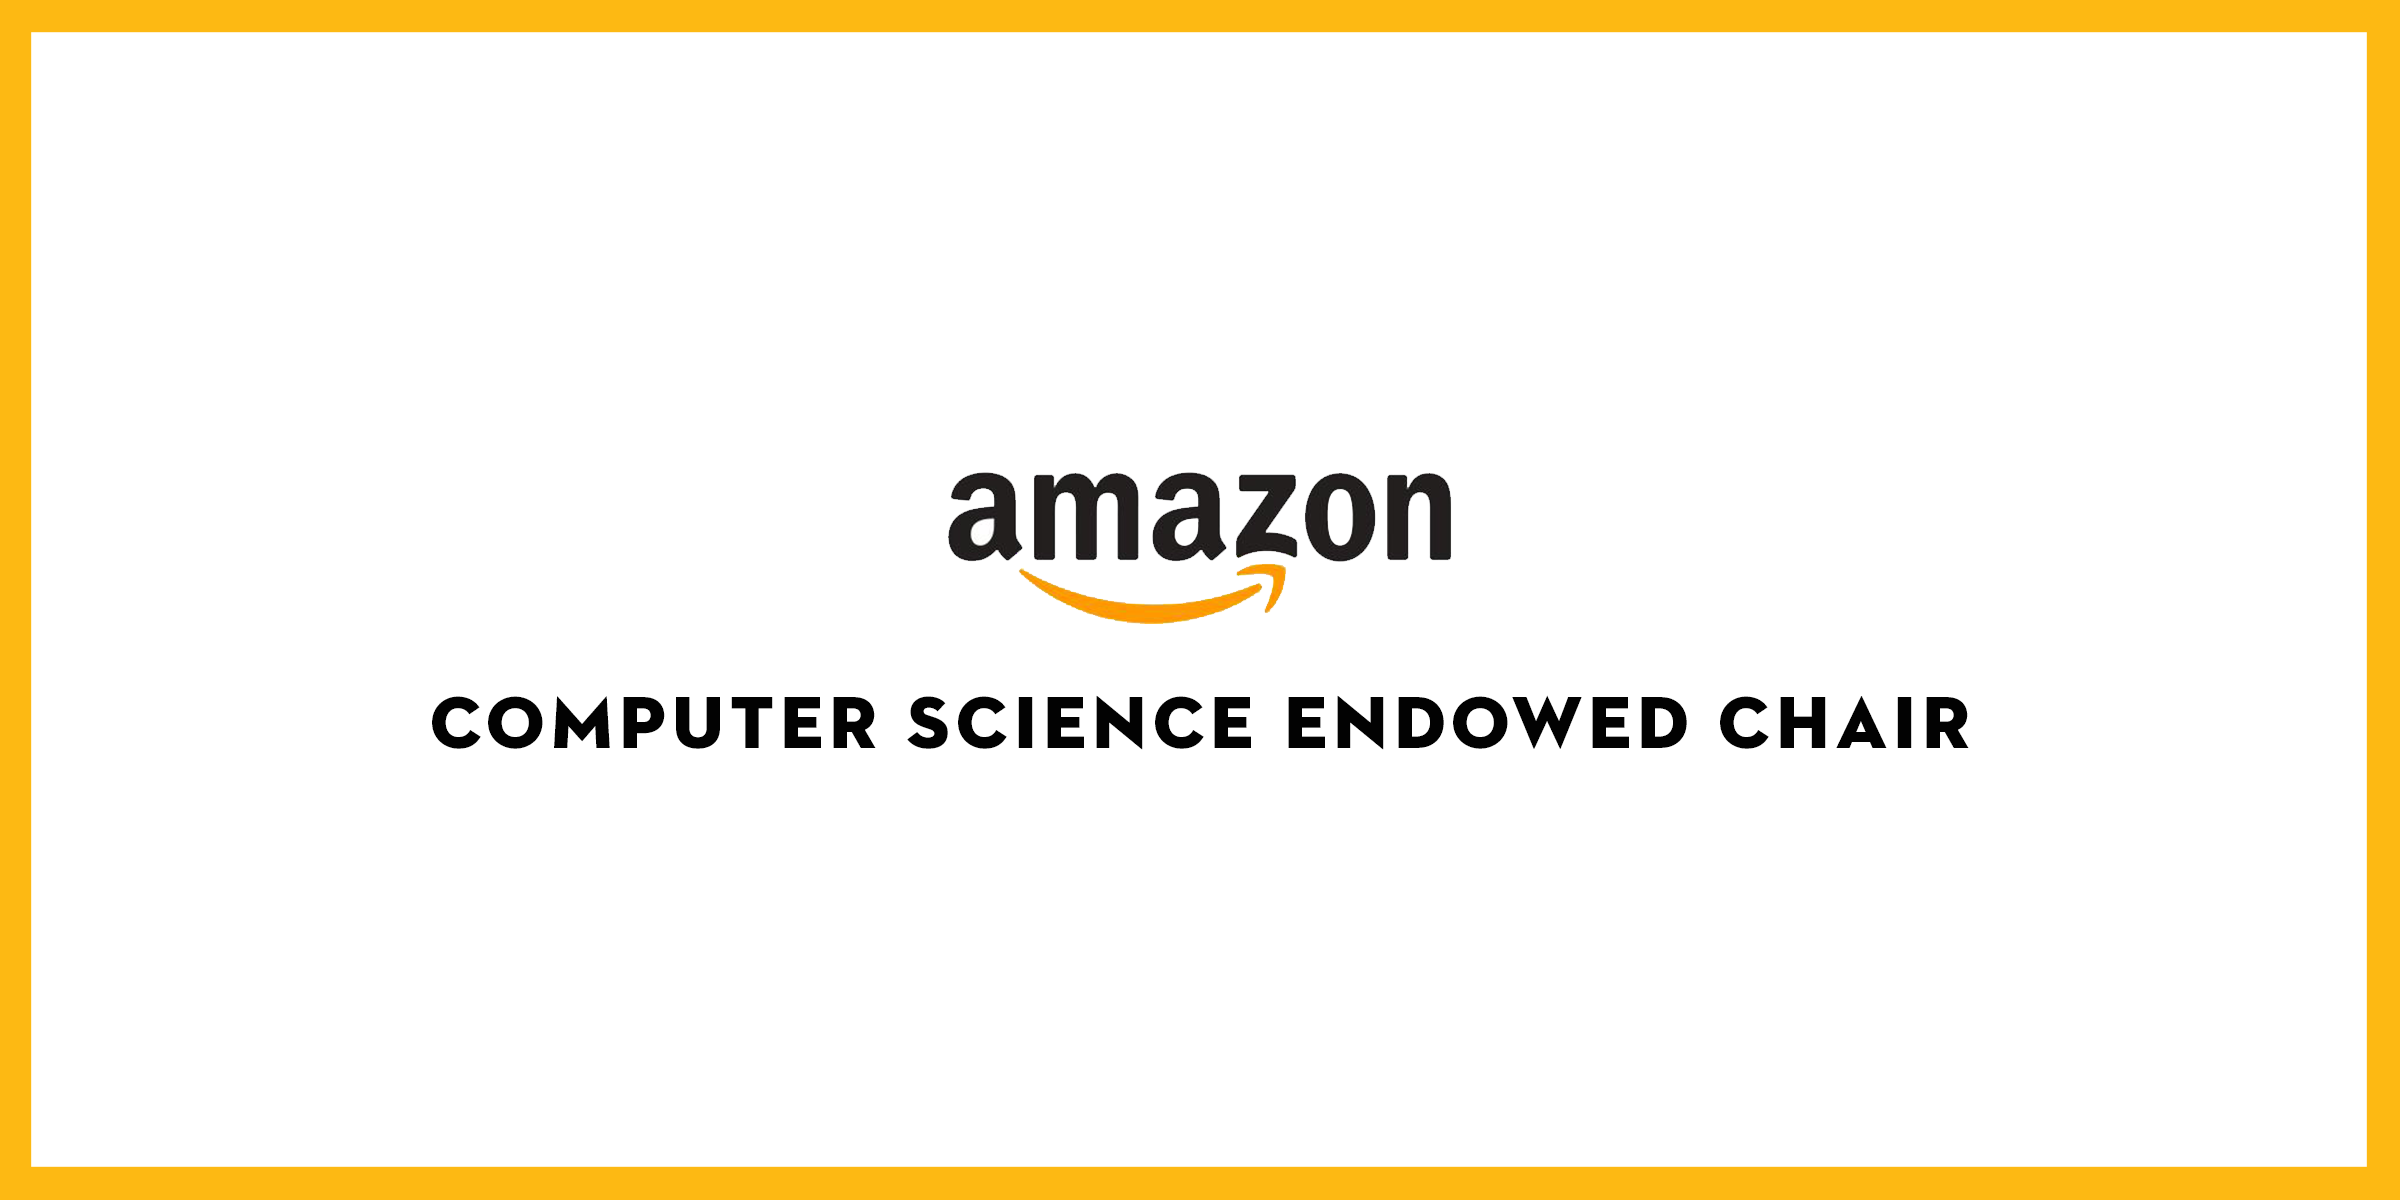 Amazon Endows Computer Science Chair